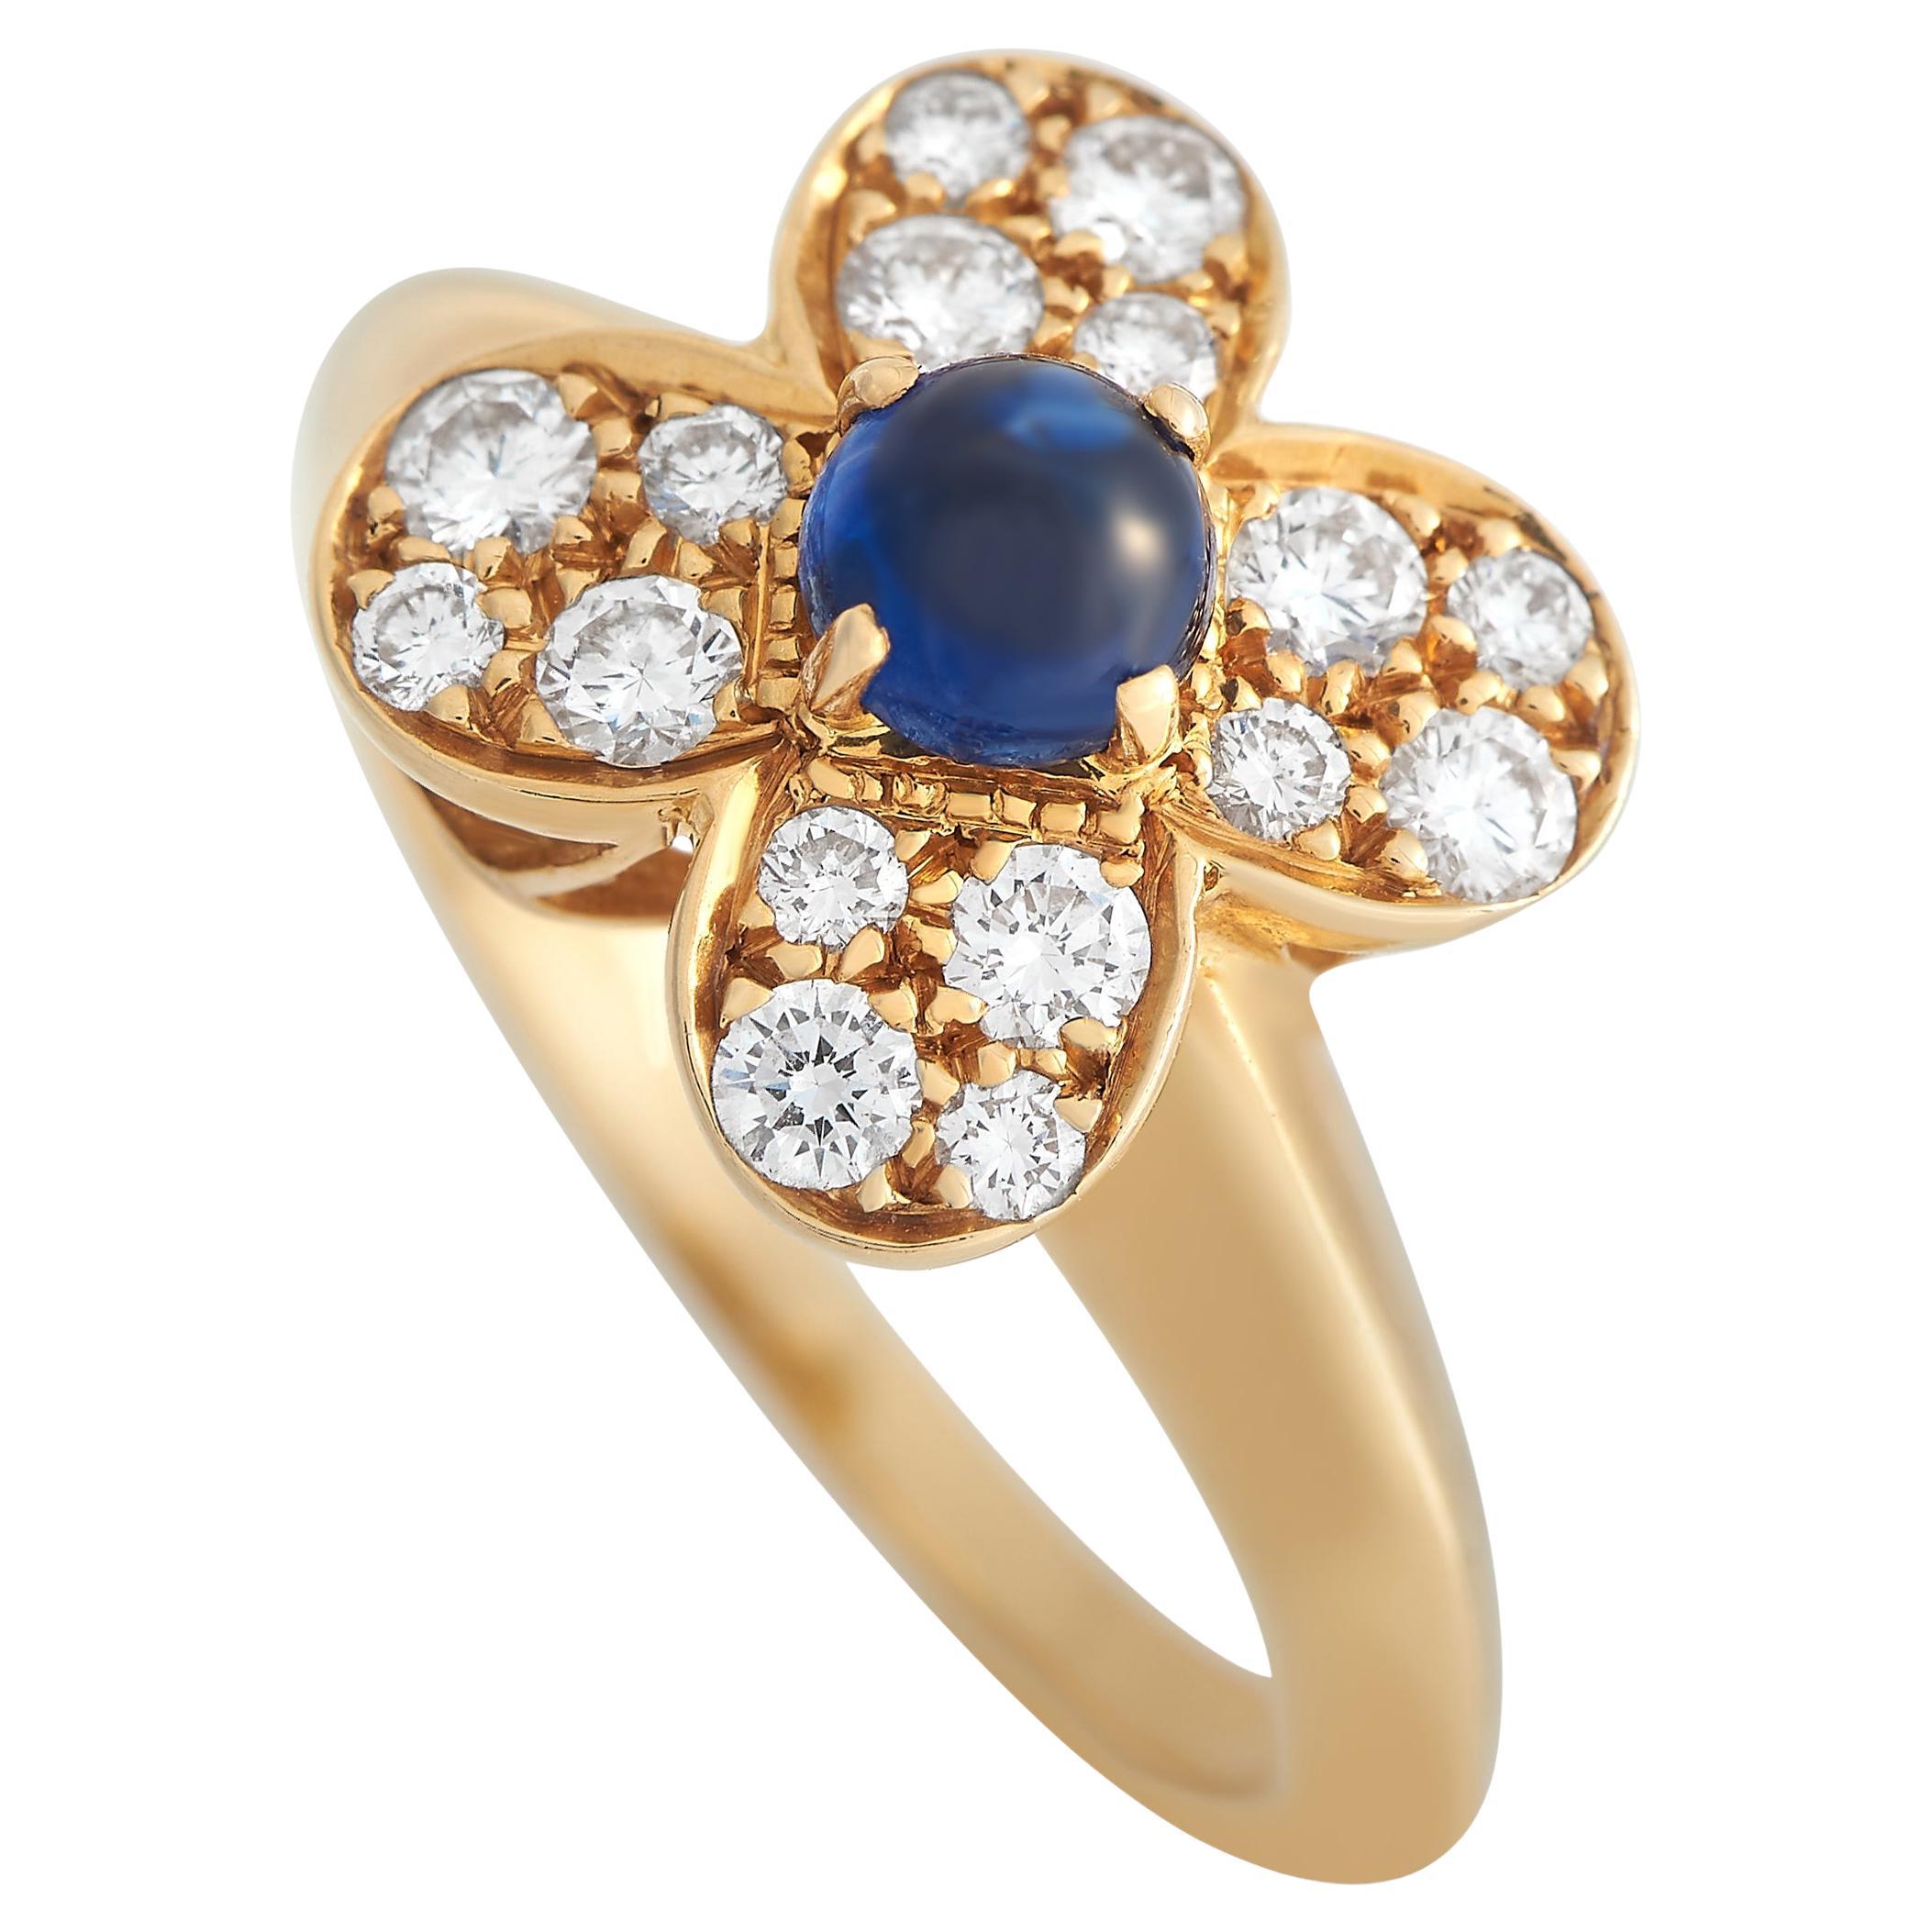 Van Cleef & Arpels Trefle 18k Yellow Gold Diamond and Sapphire Ring